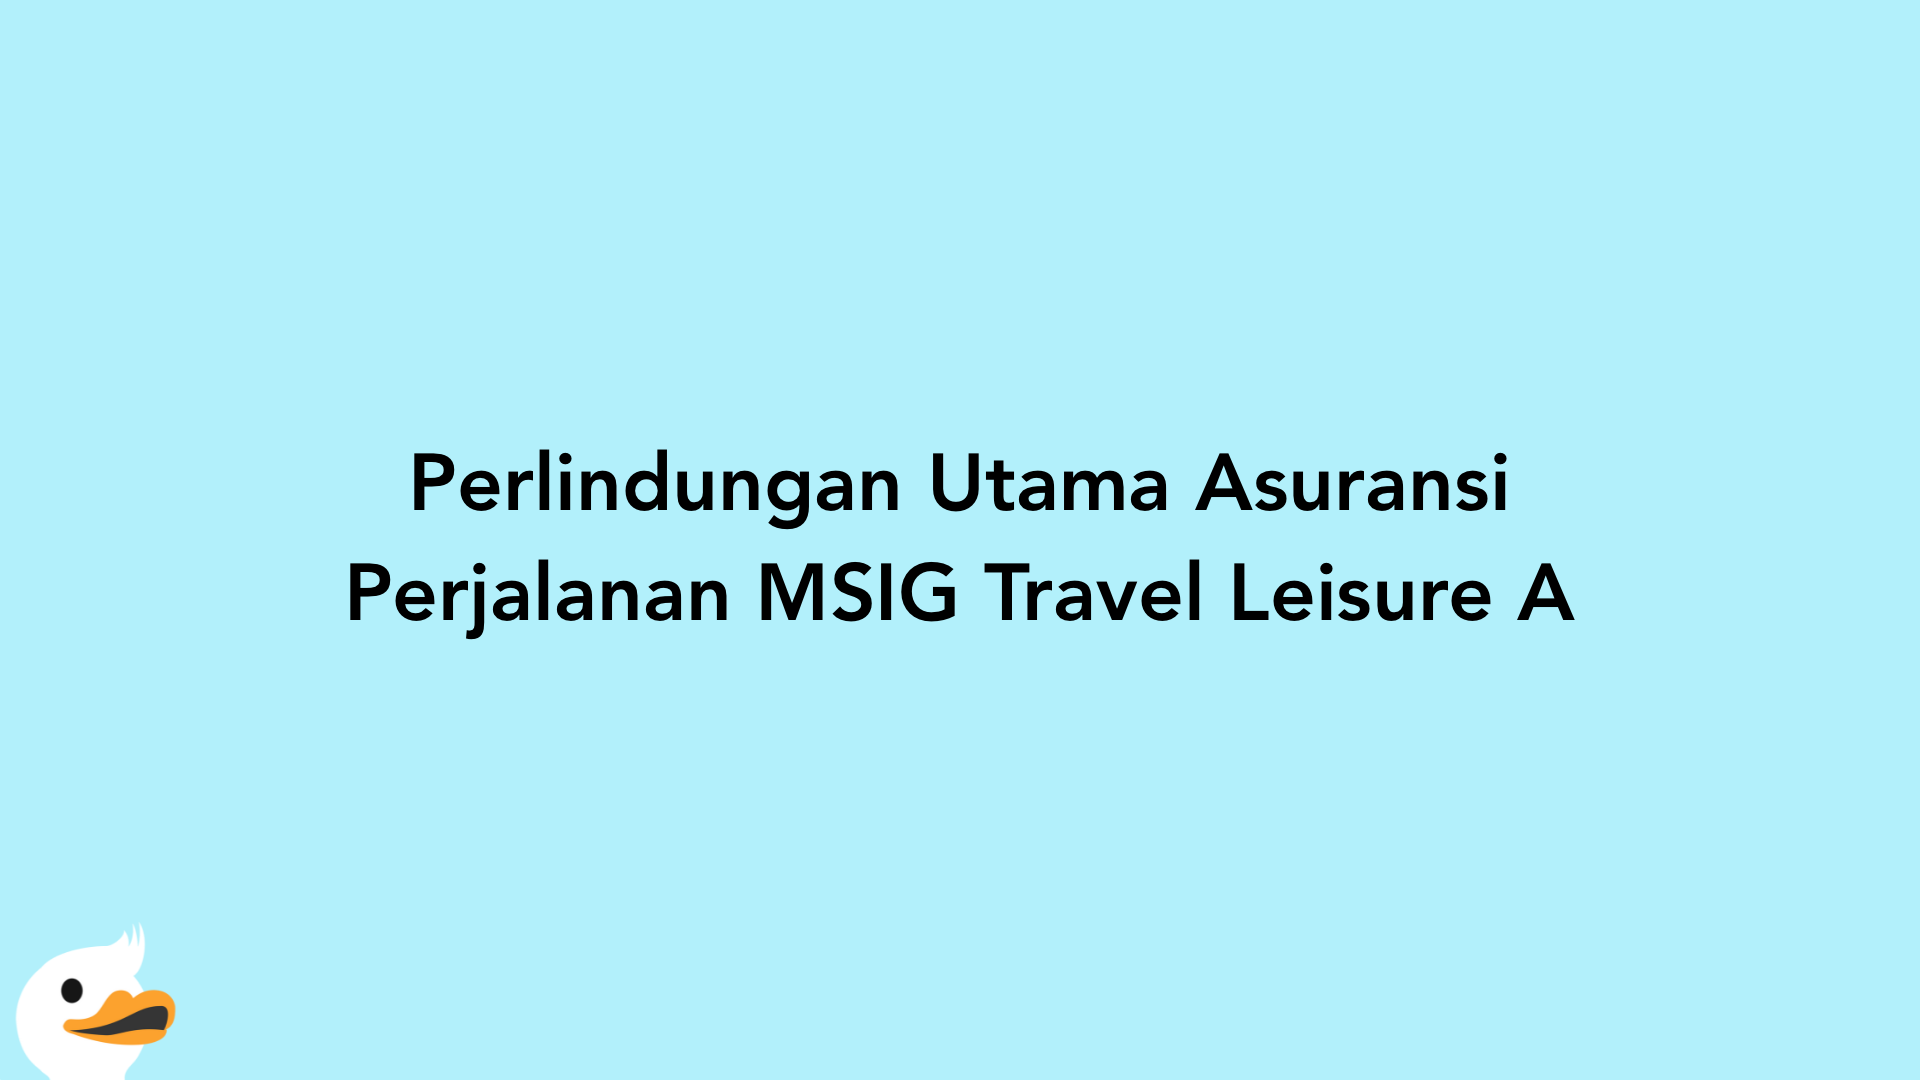 Perlindungan Utama Asuransi Perjalanan MSIG Travel Leisure A